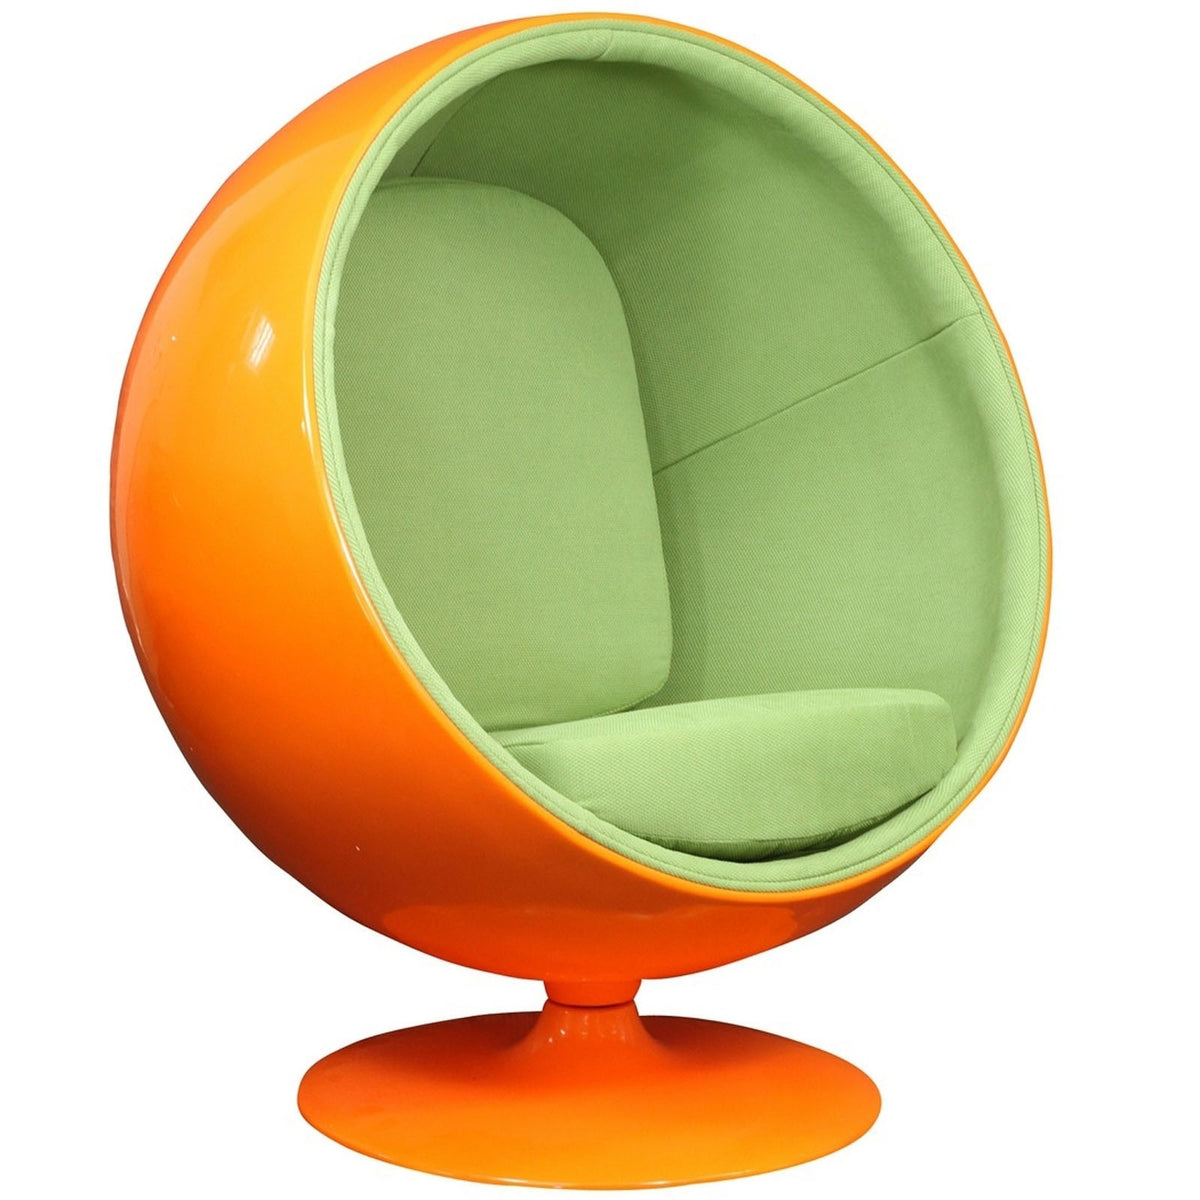 Keane Lounge Chair Orange Green